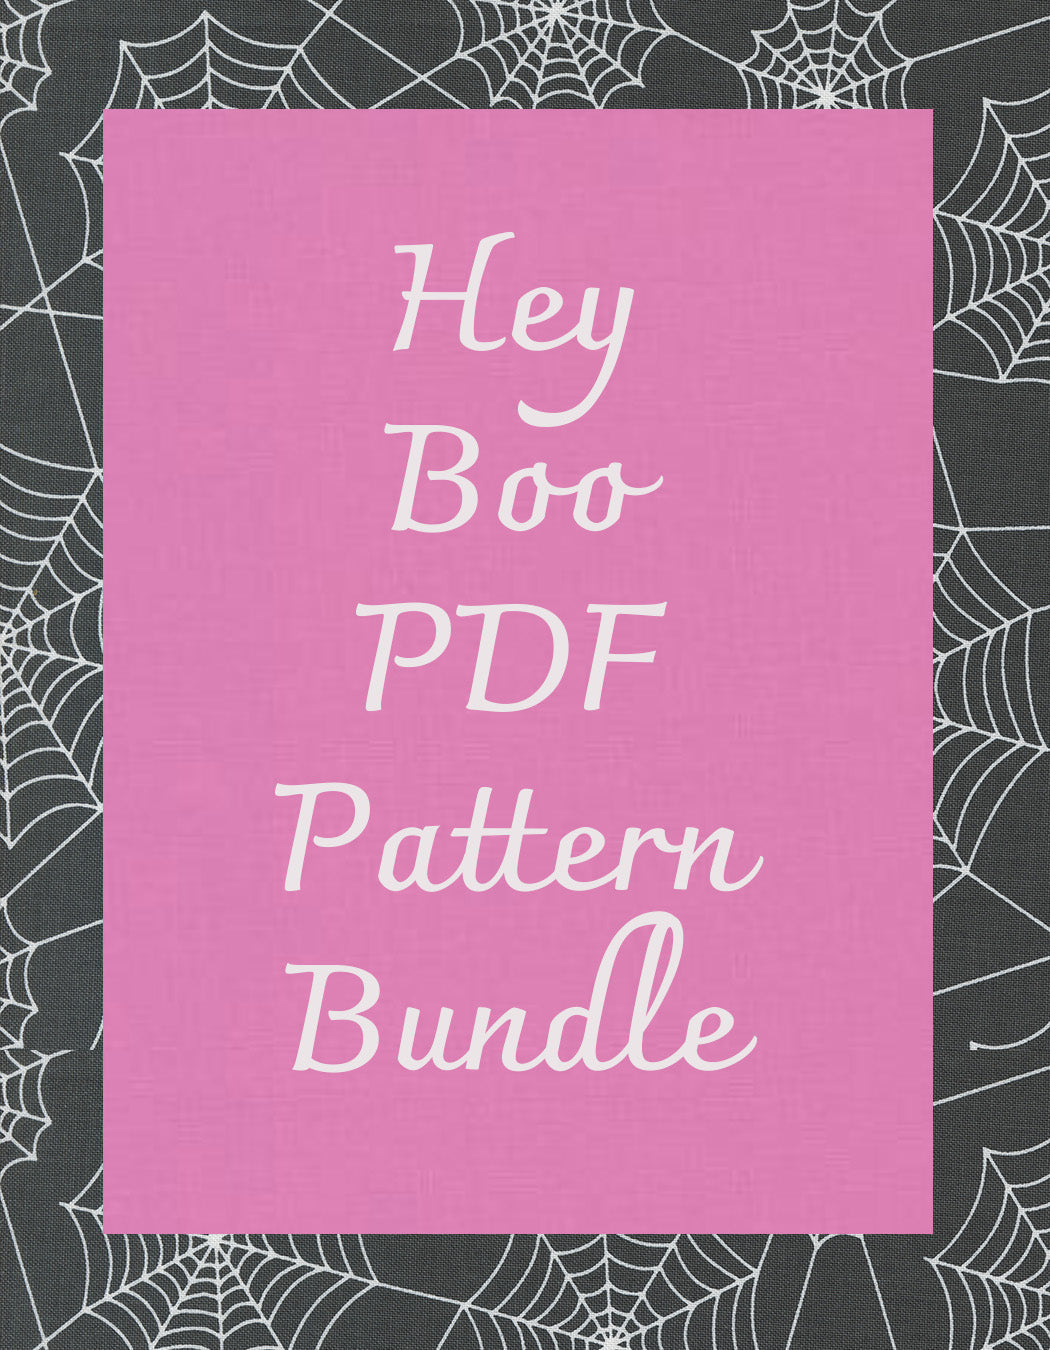 halloween quilt patterns to download.